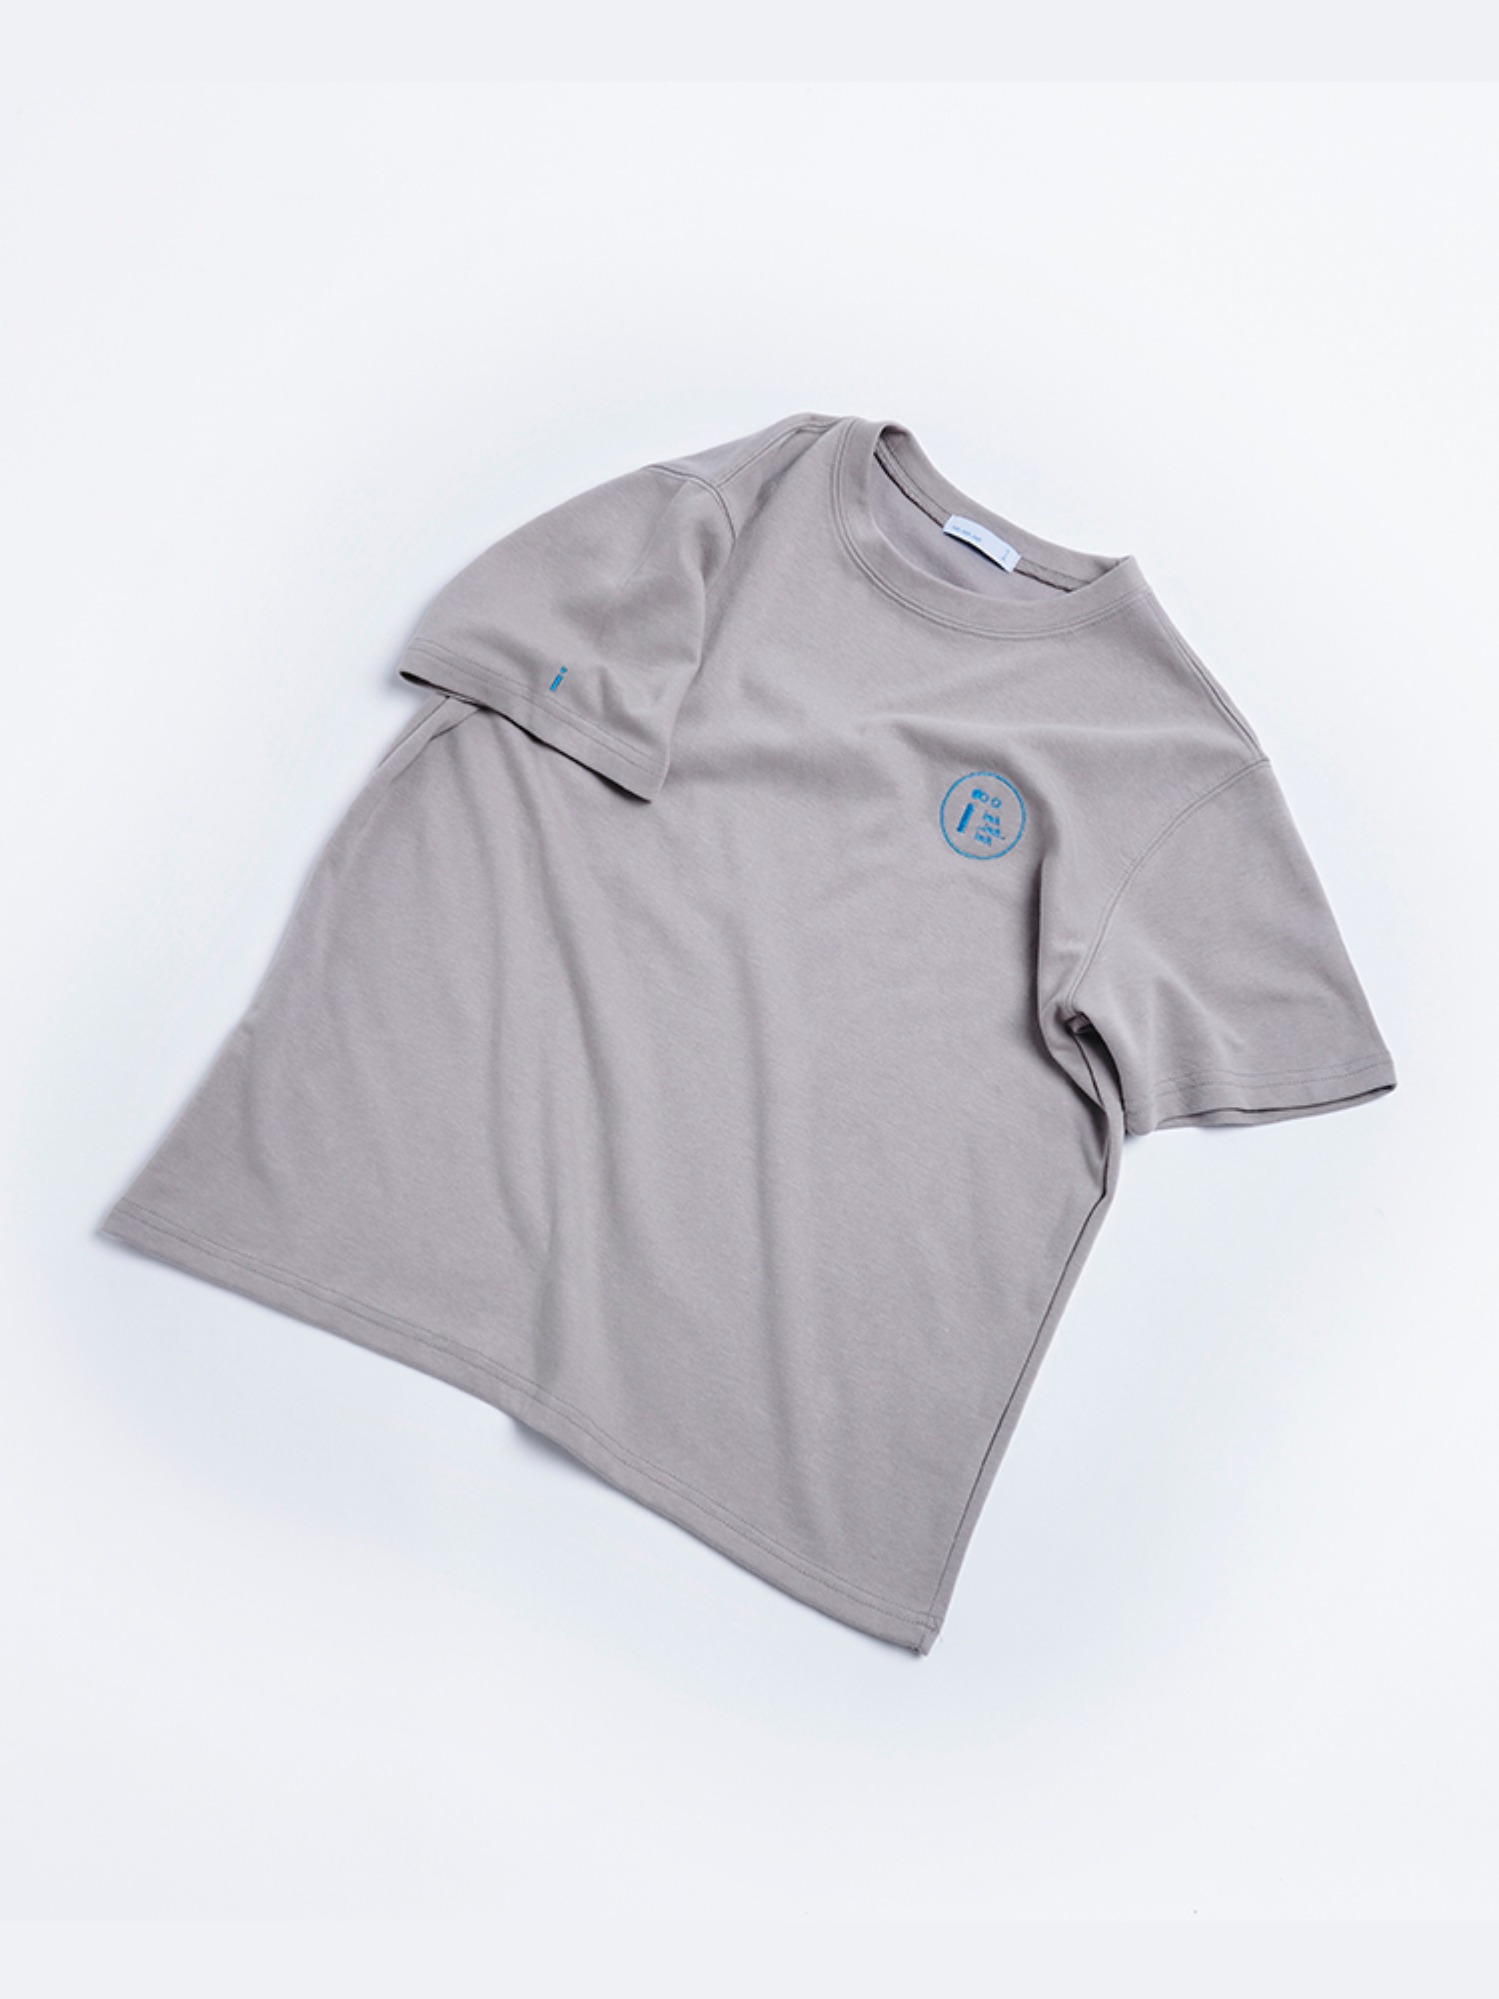 Basic T shirt (Cool Gray)